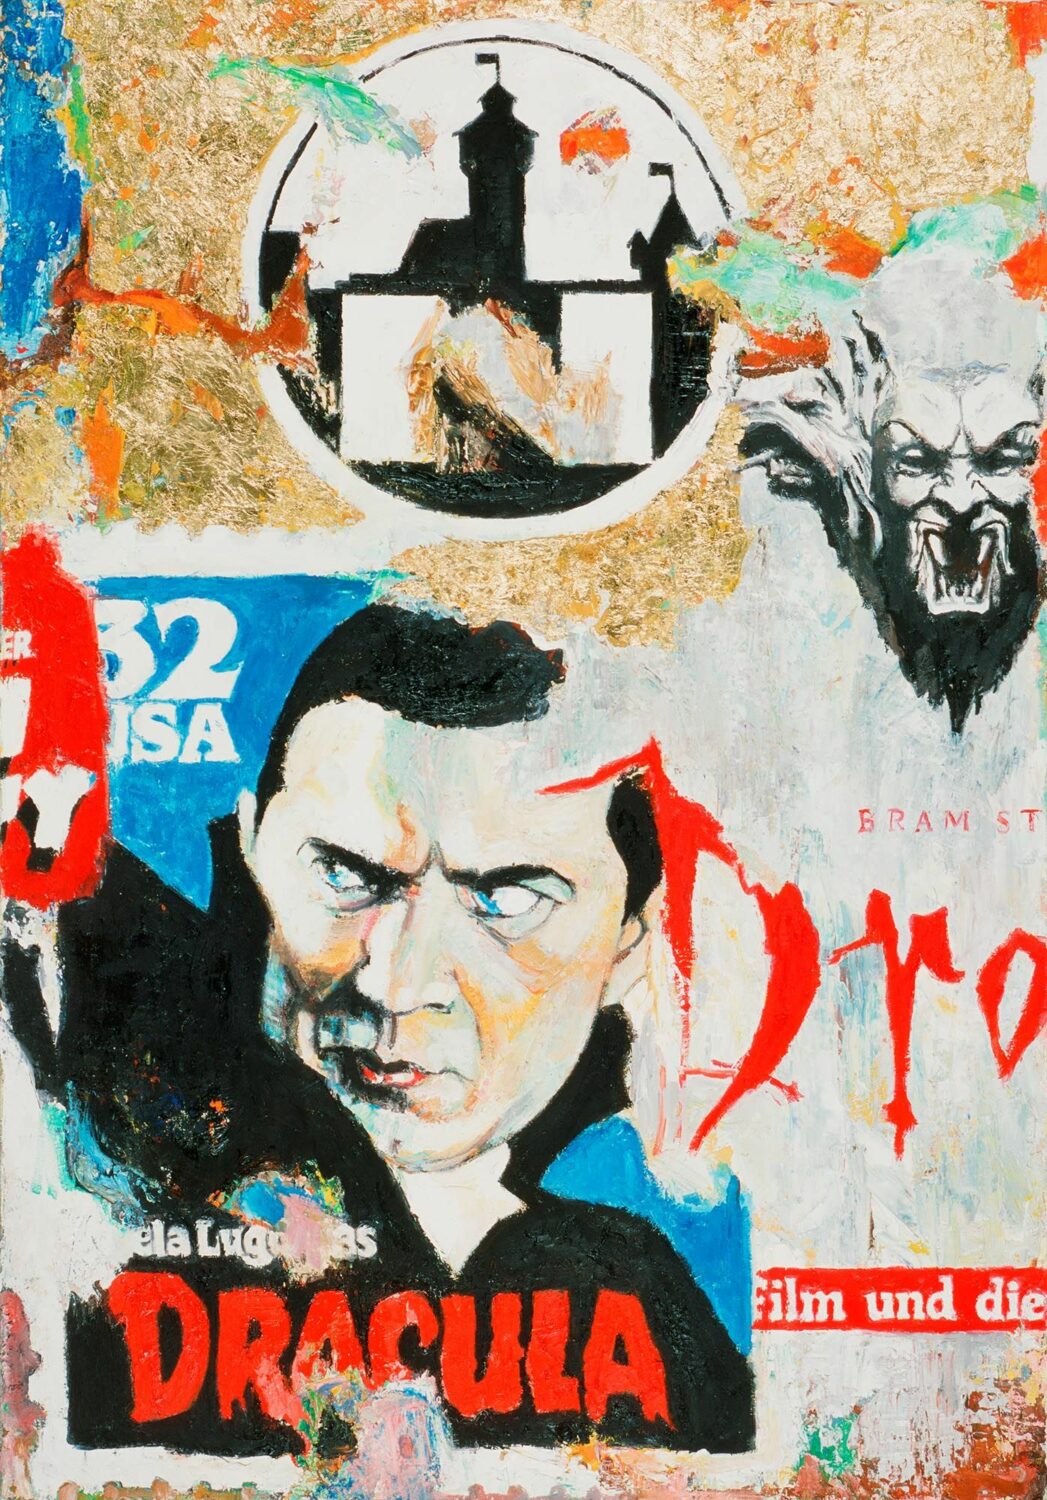 Jens Lorenzen: Dracula